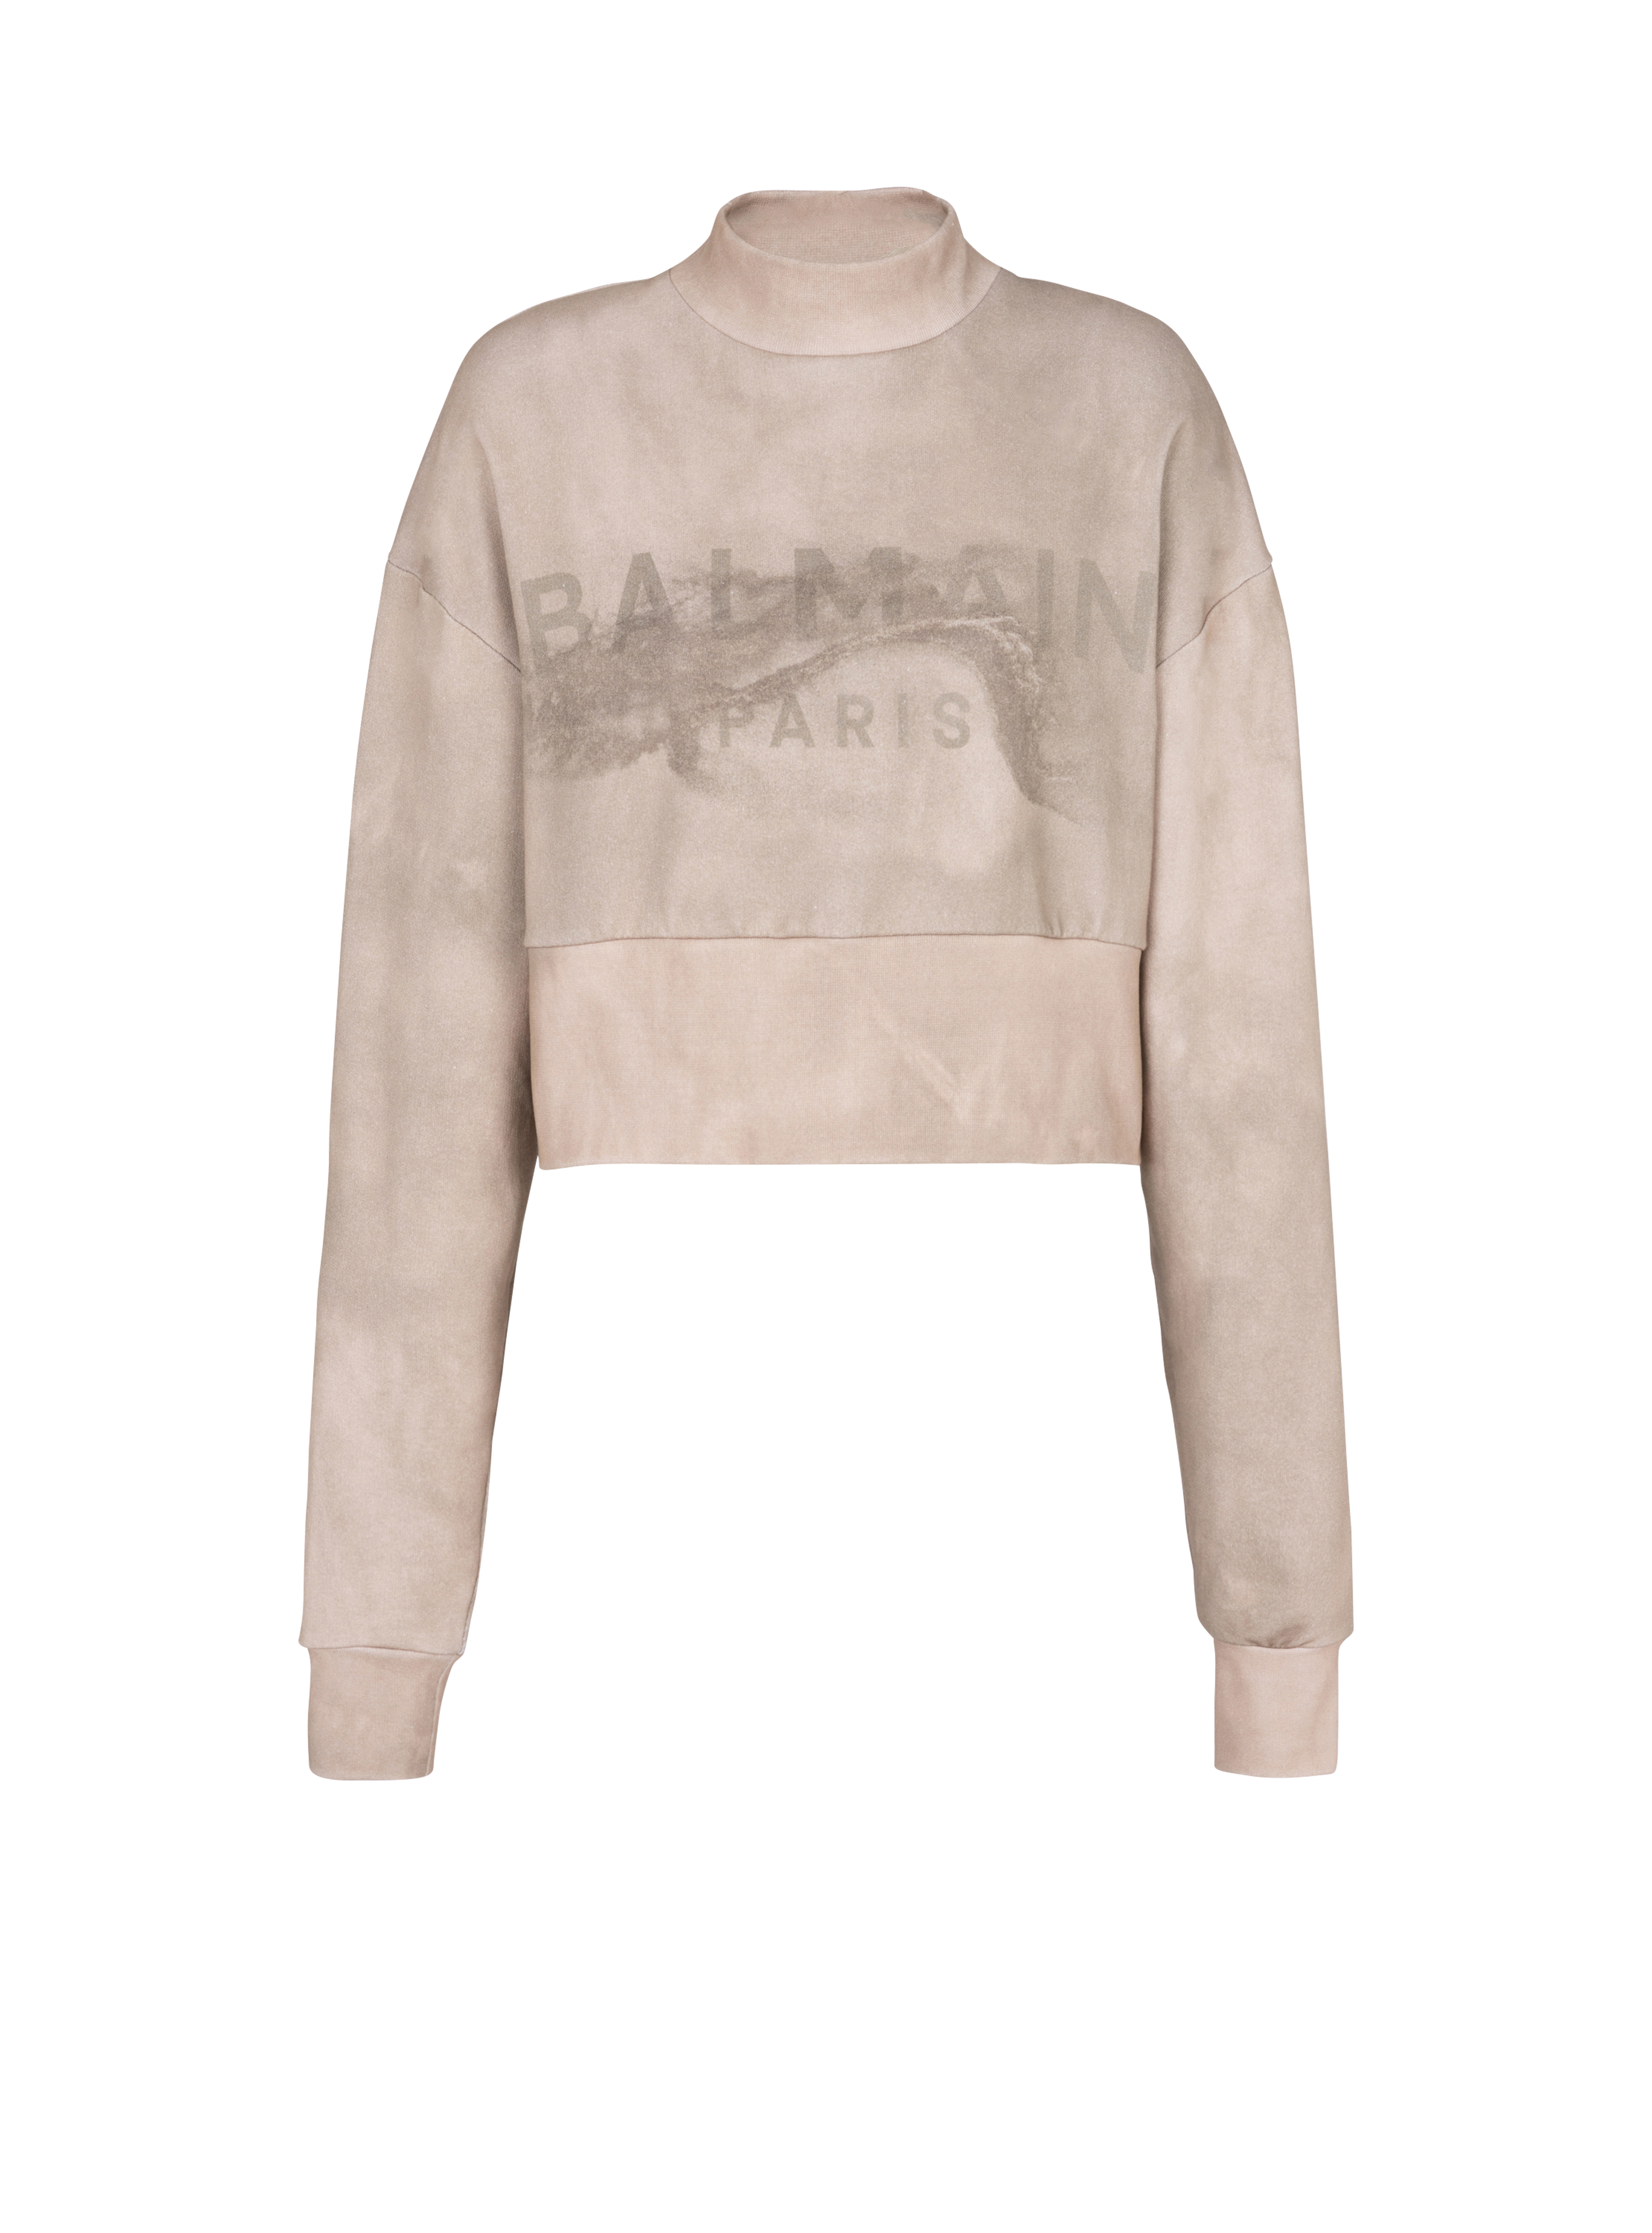 Balmain巴尔曼标志印花短款环保设计棉质运动衫, beige